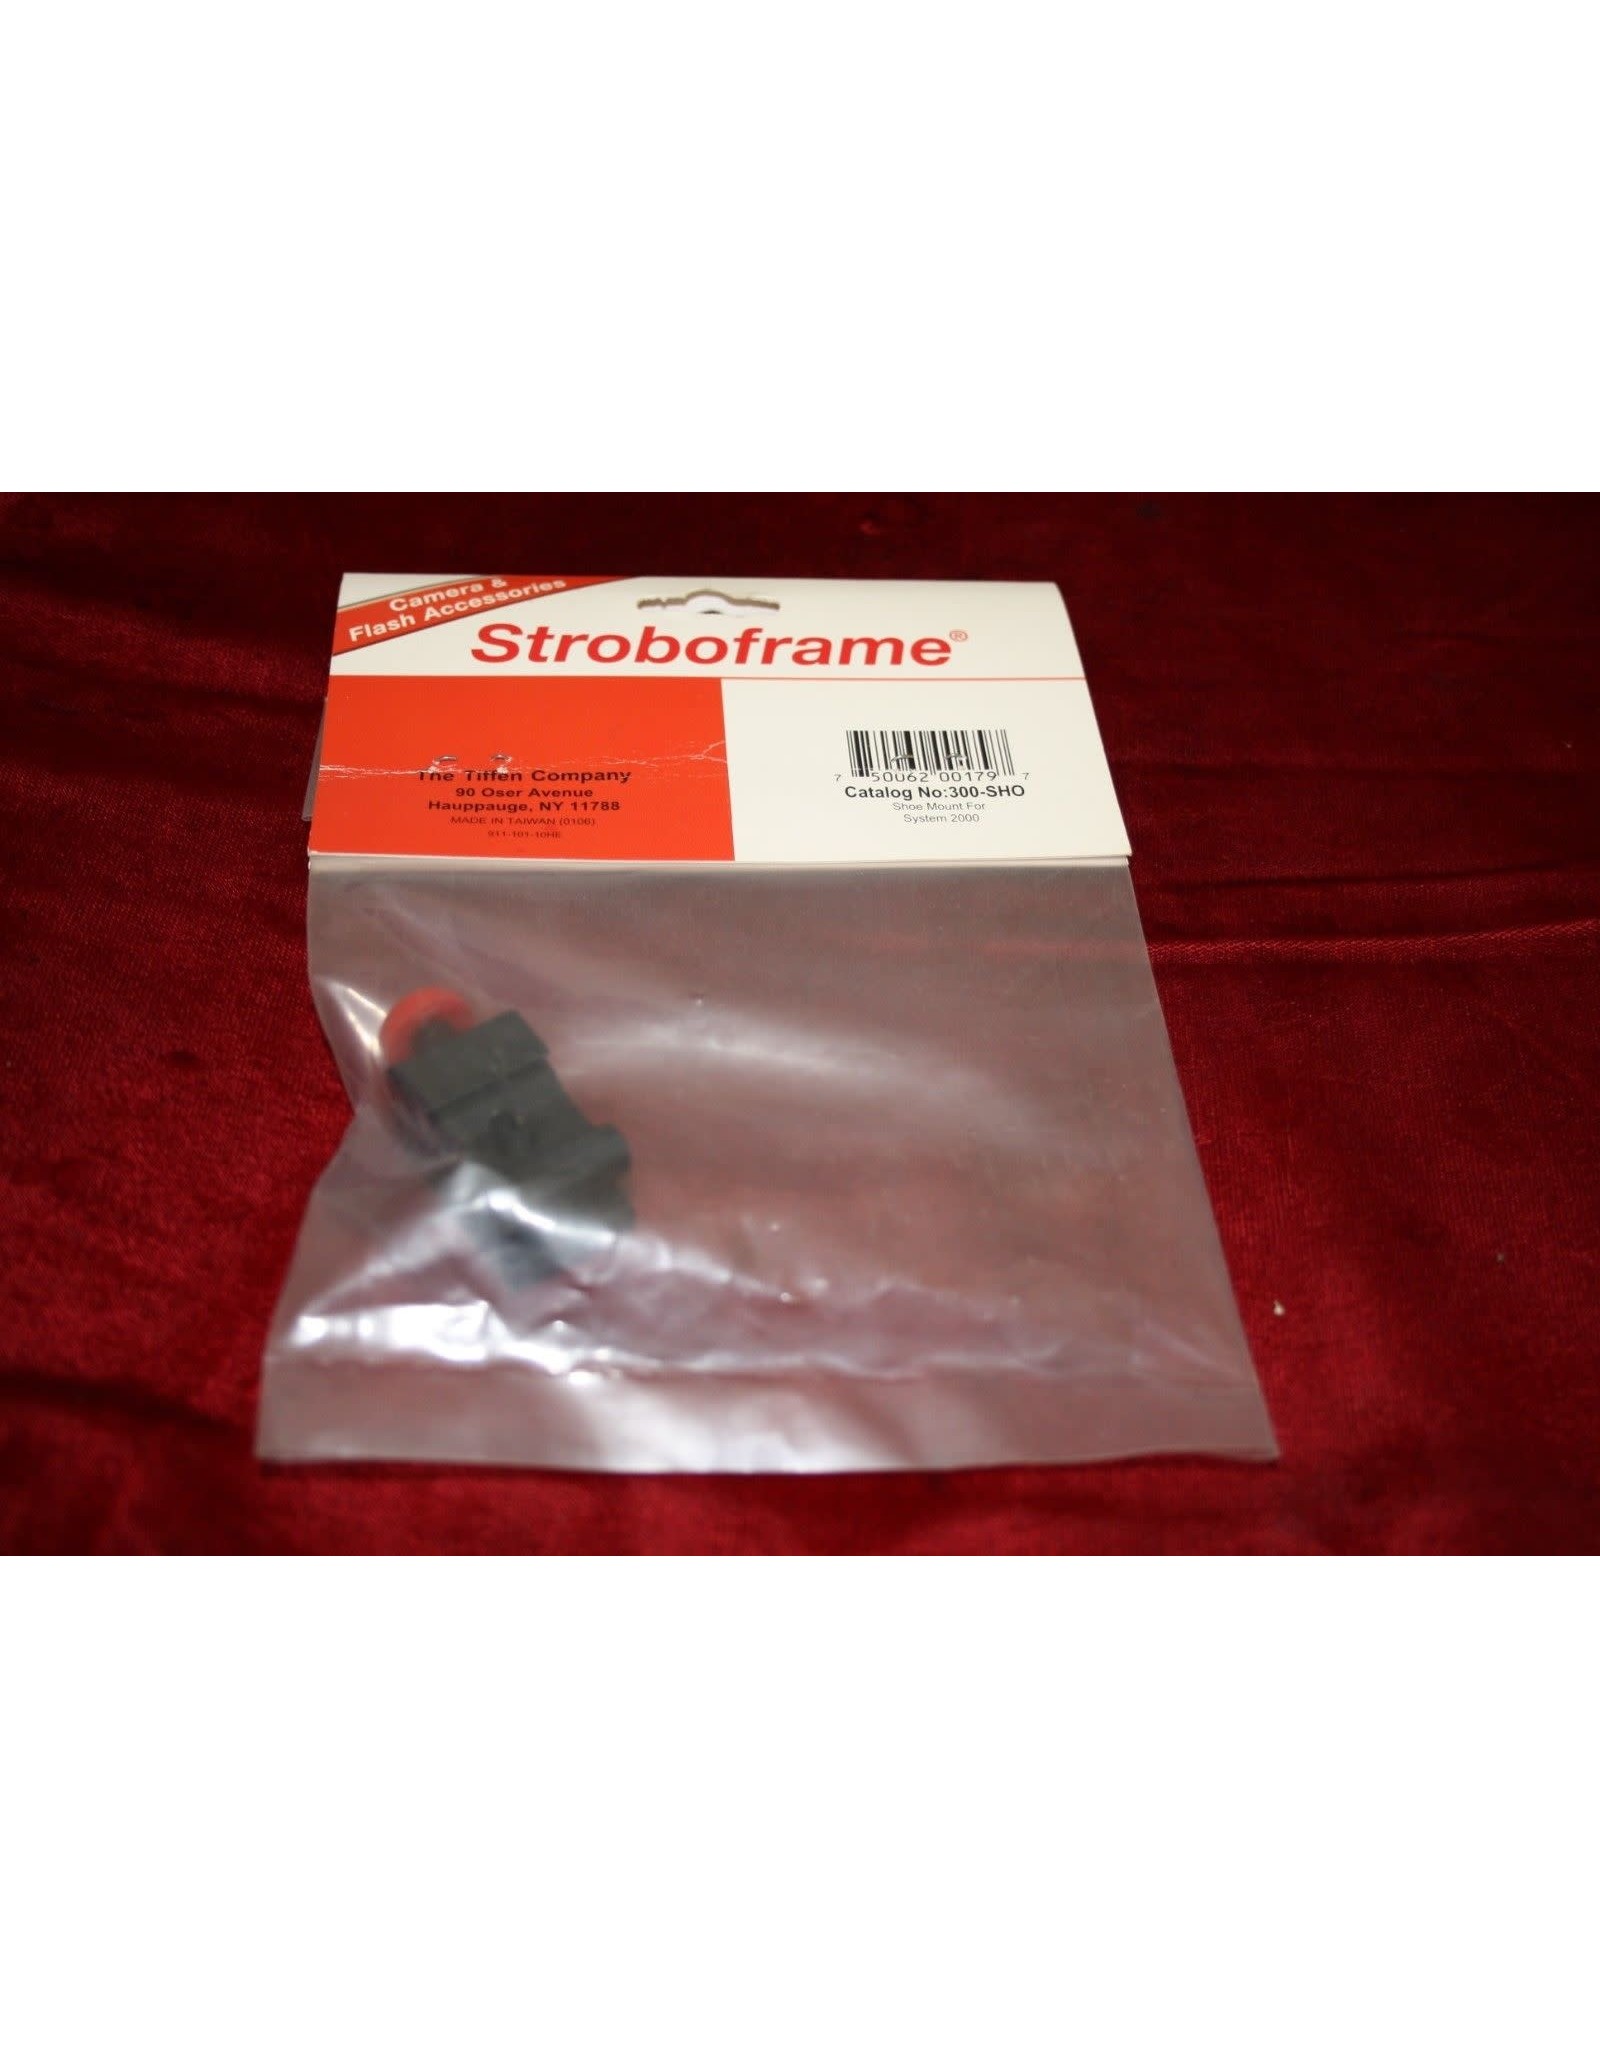 Stroboframe Shoe-Type flash mount for VH, RL, system 2000 Brackets (Pre-owned)